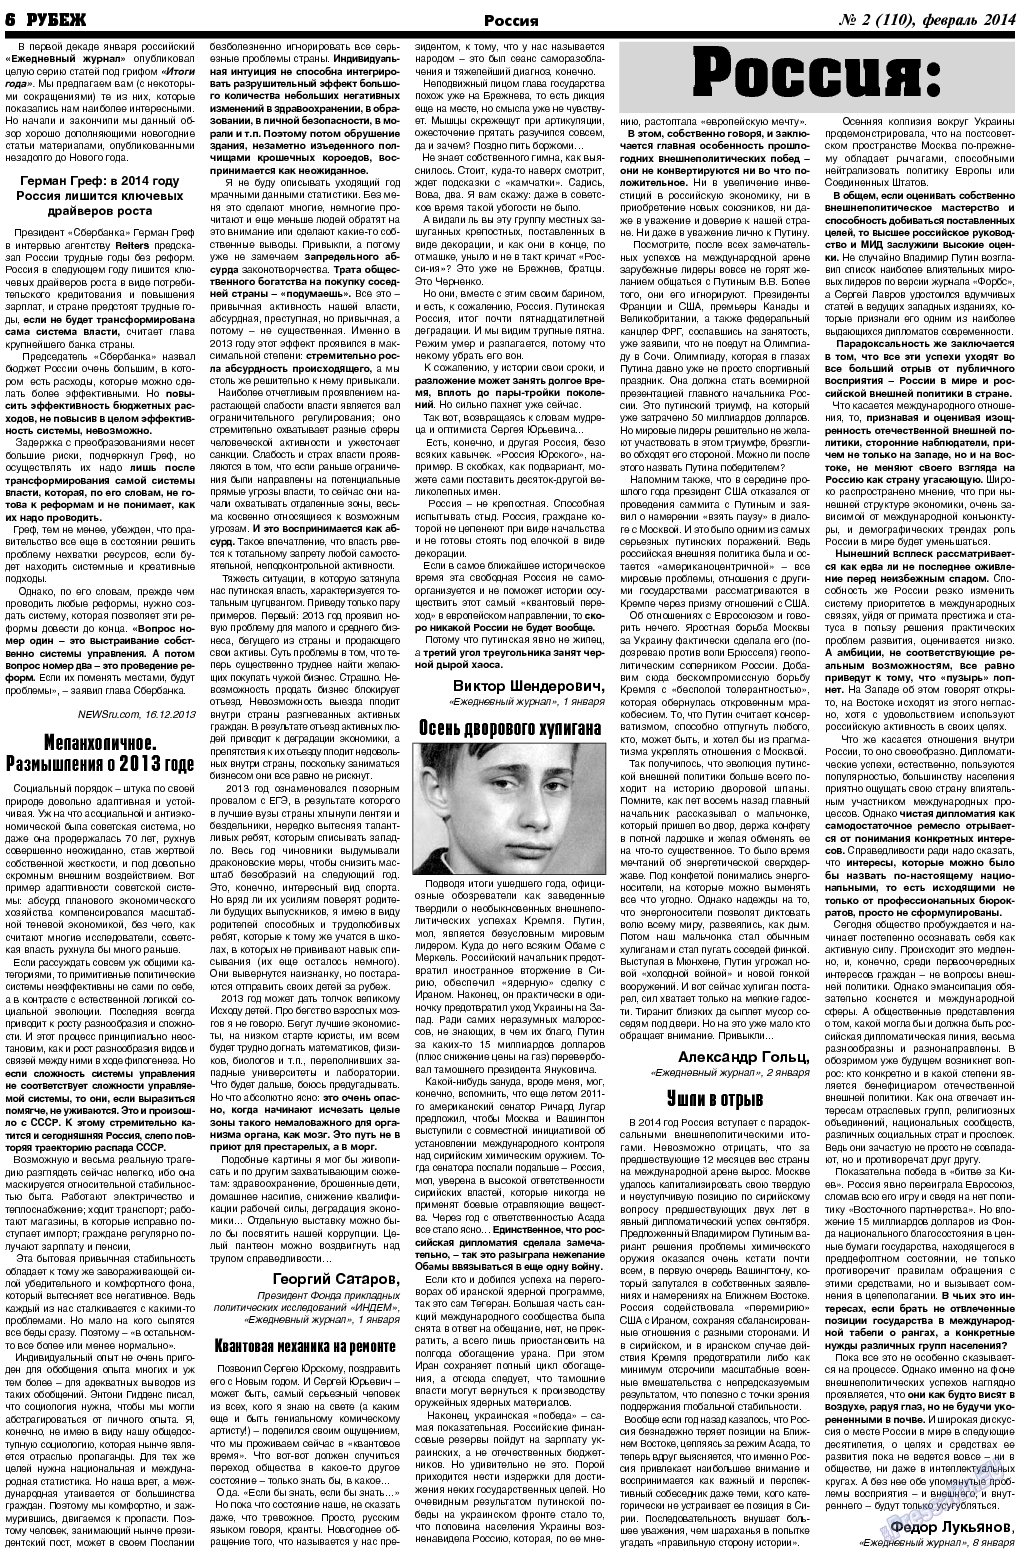 Рубеж, газета. 2014 №2 стр.6